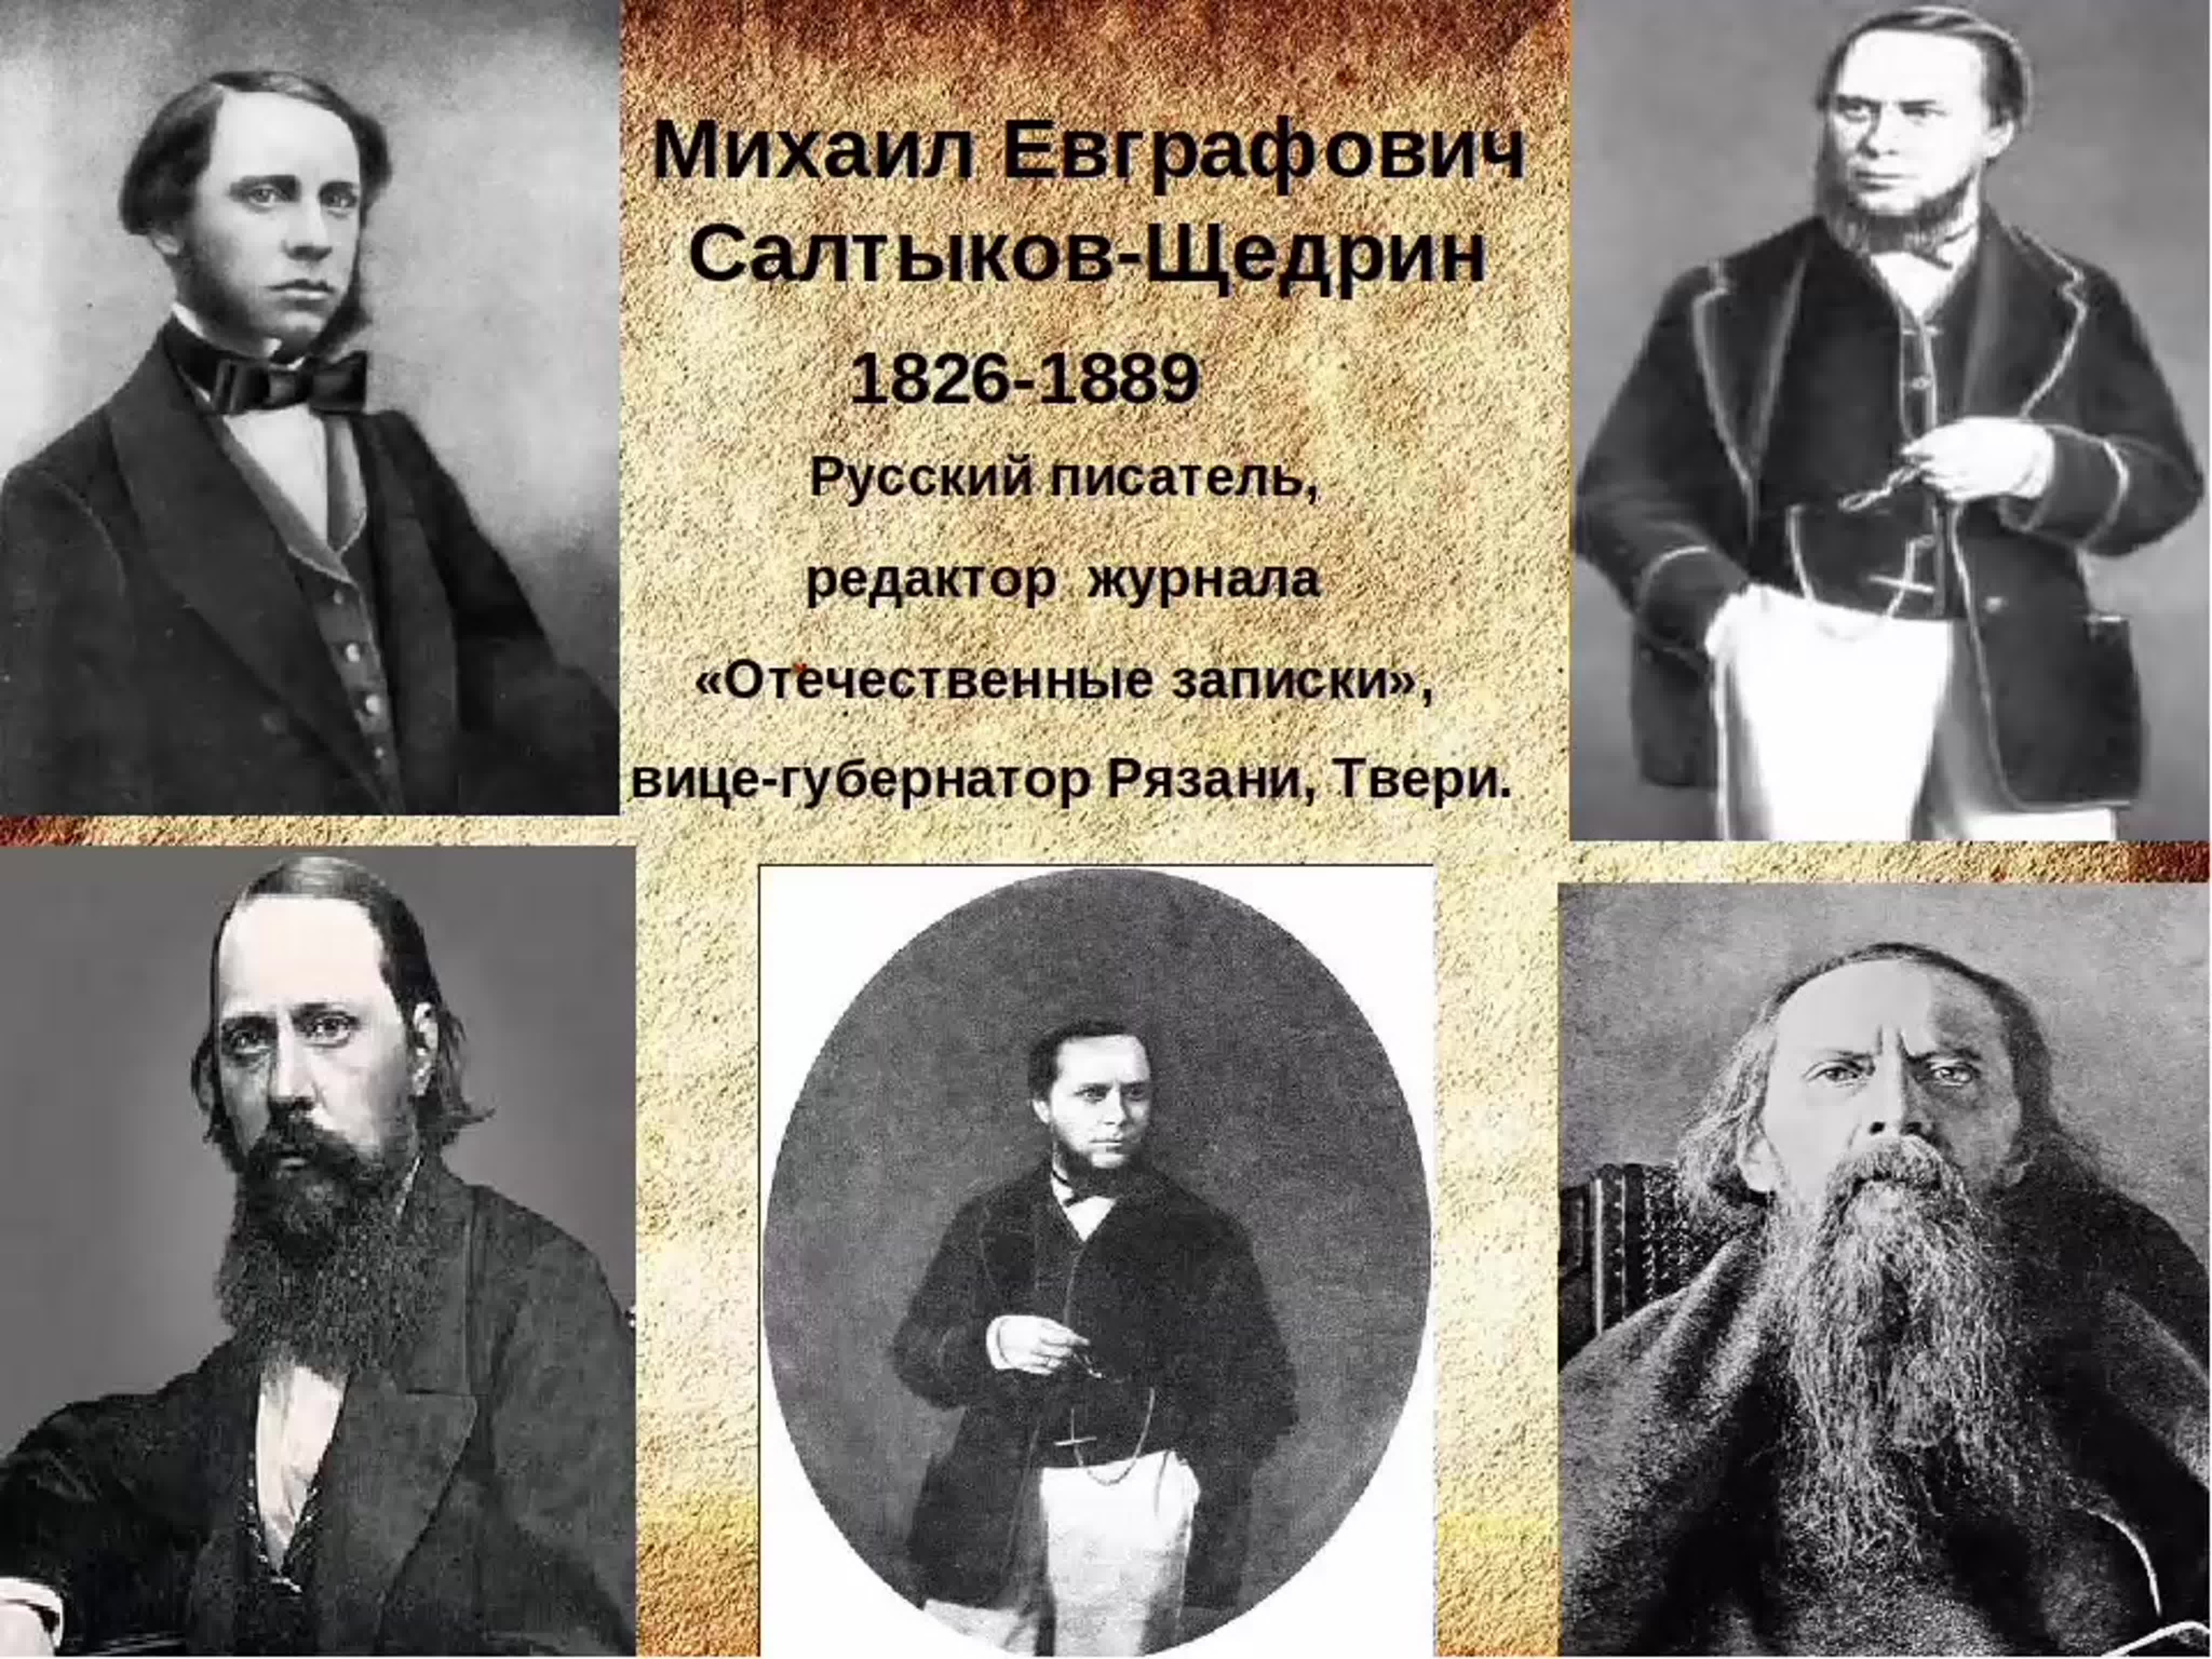 Салтыков-Щедрин Михаил Евграфович (1826-1889)